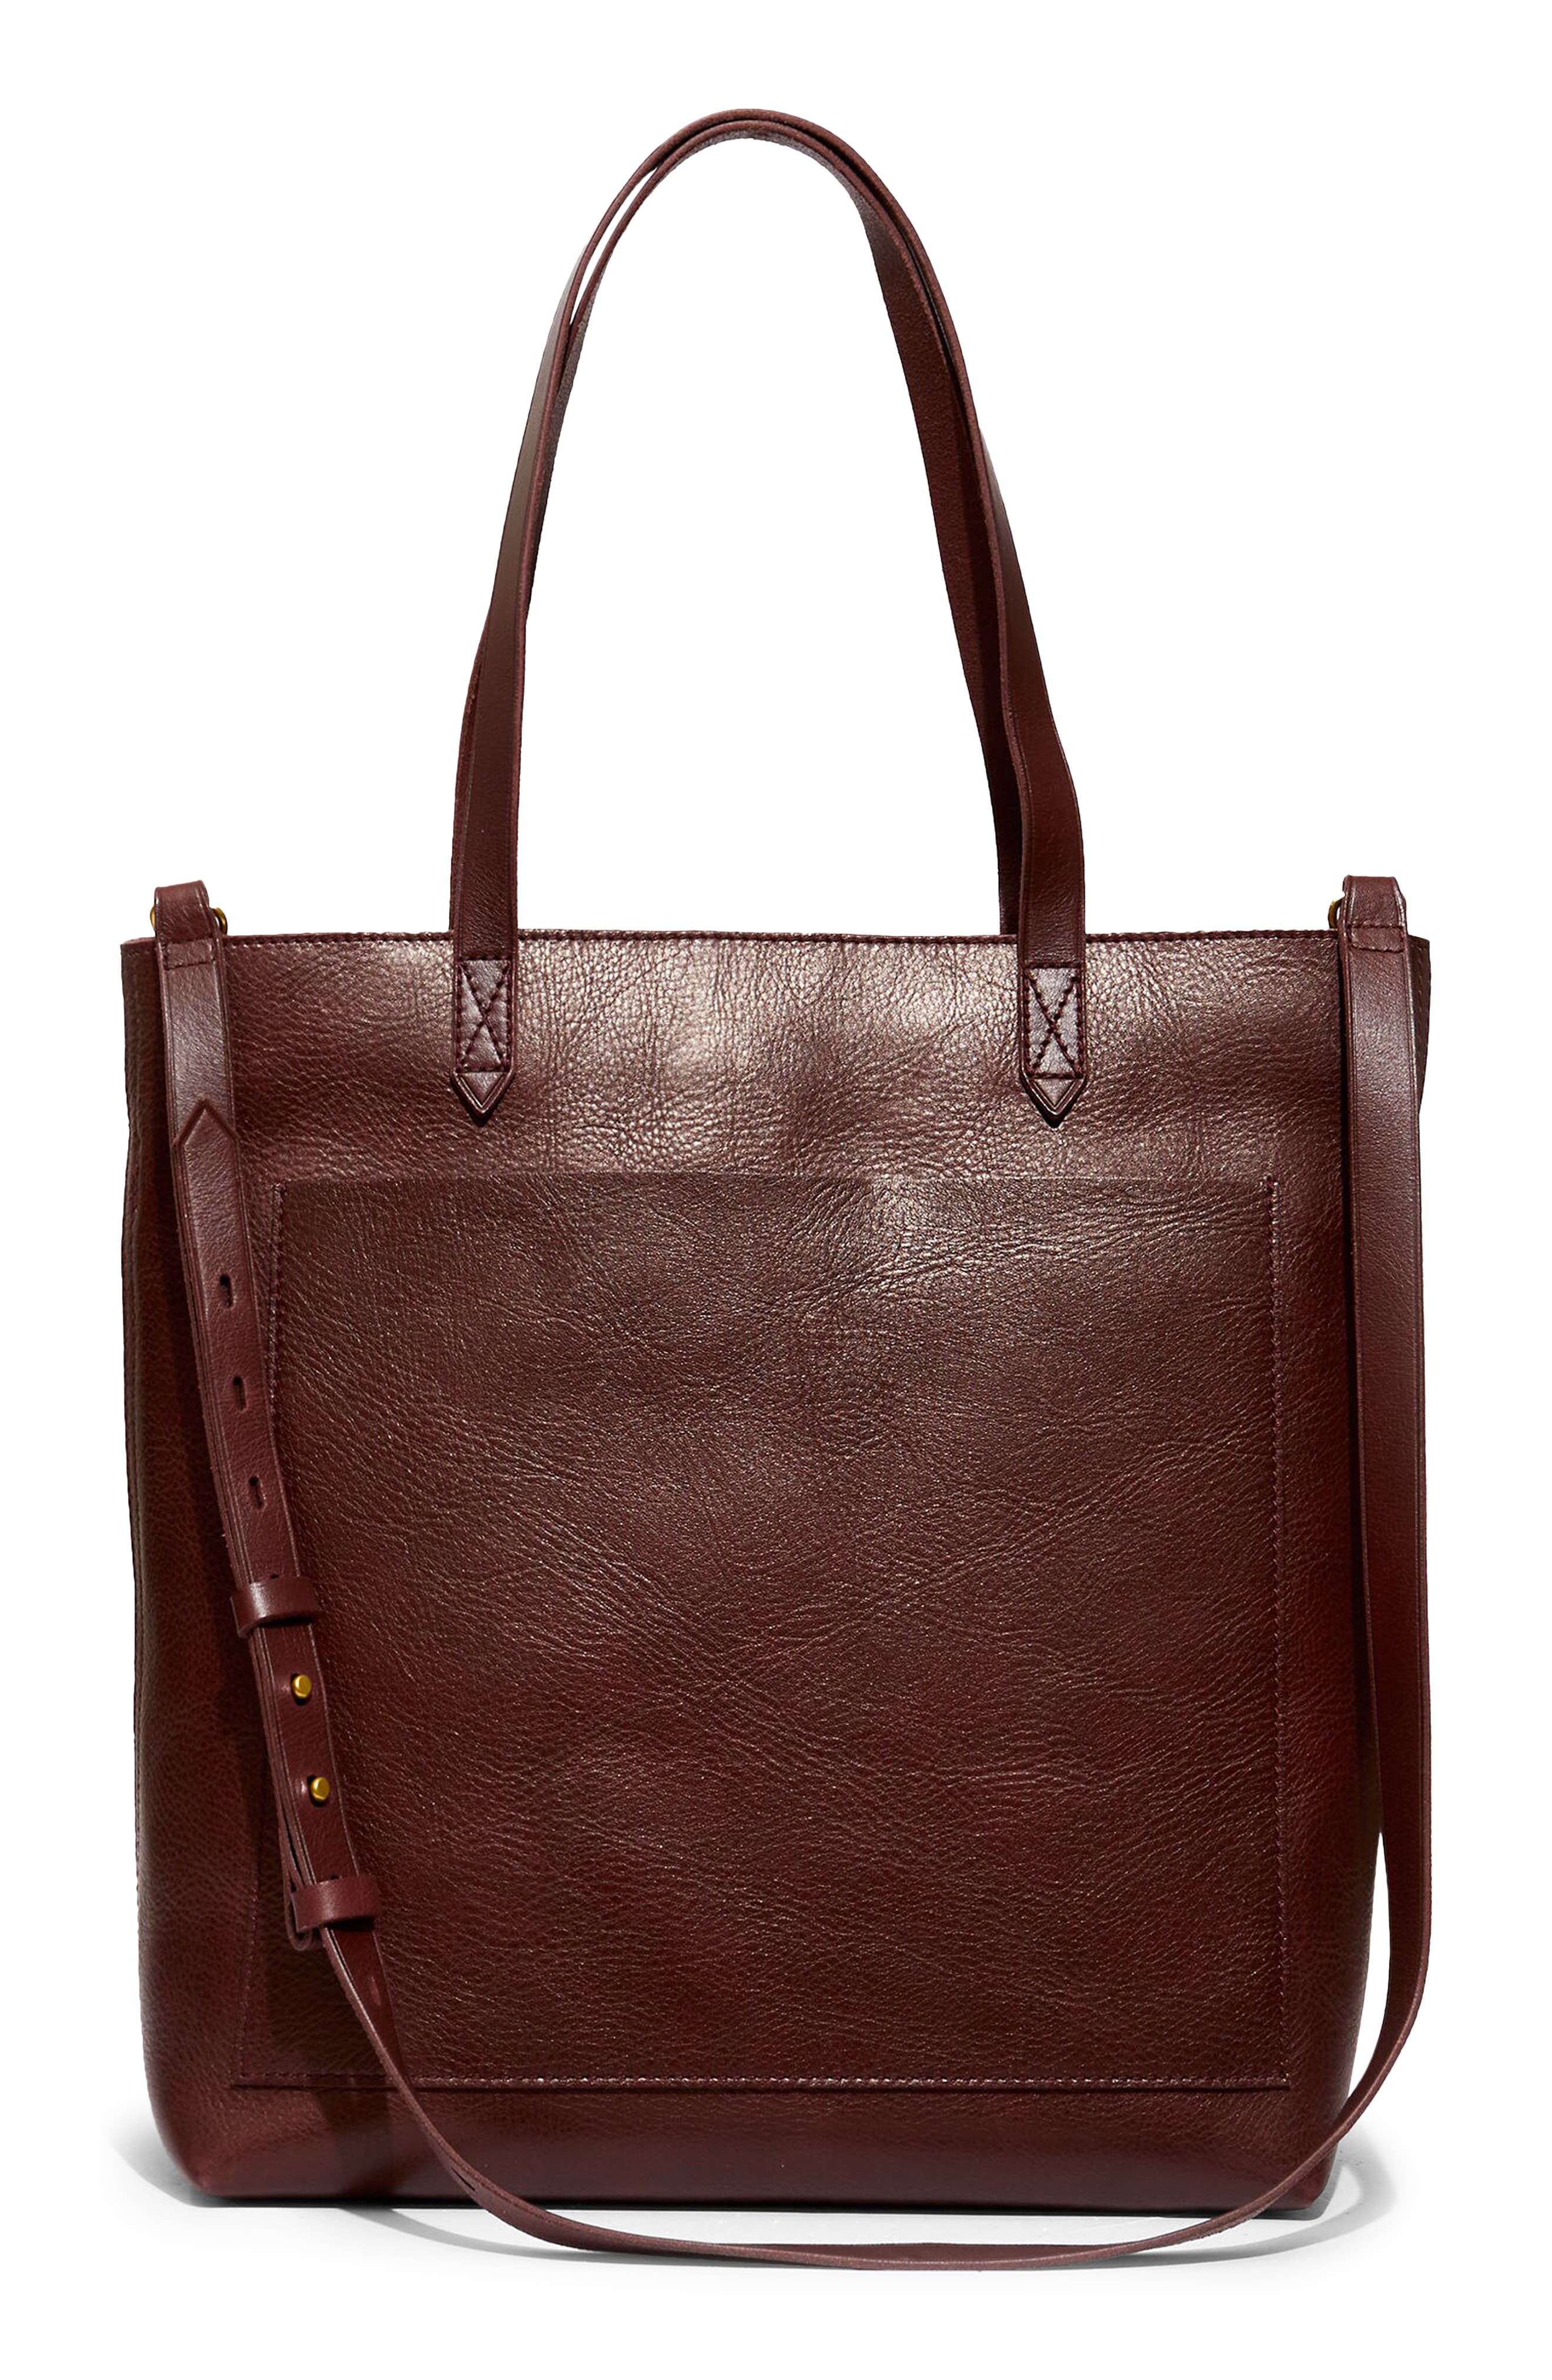 Ladies Handbag Ladies Handbags Fashion Leather Handbags Leather Bags Large Capacity Handbag Shoulder Bags Messenger Tote Bags Color : Silver, Size : M 